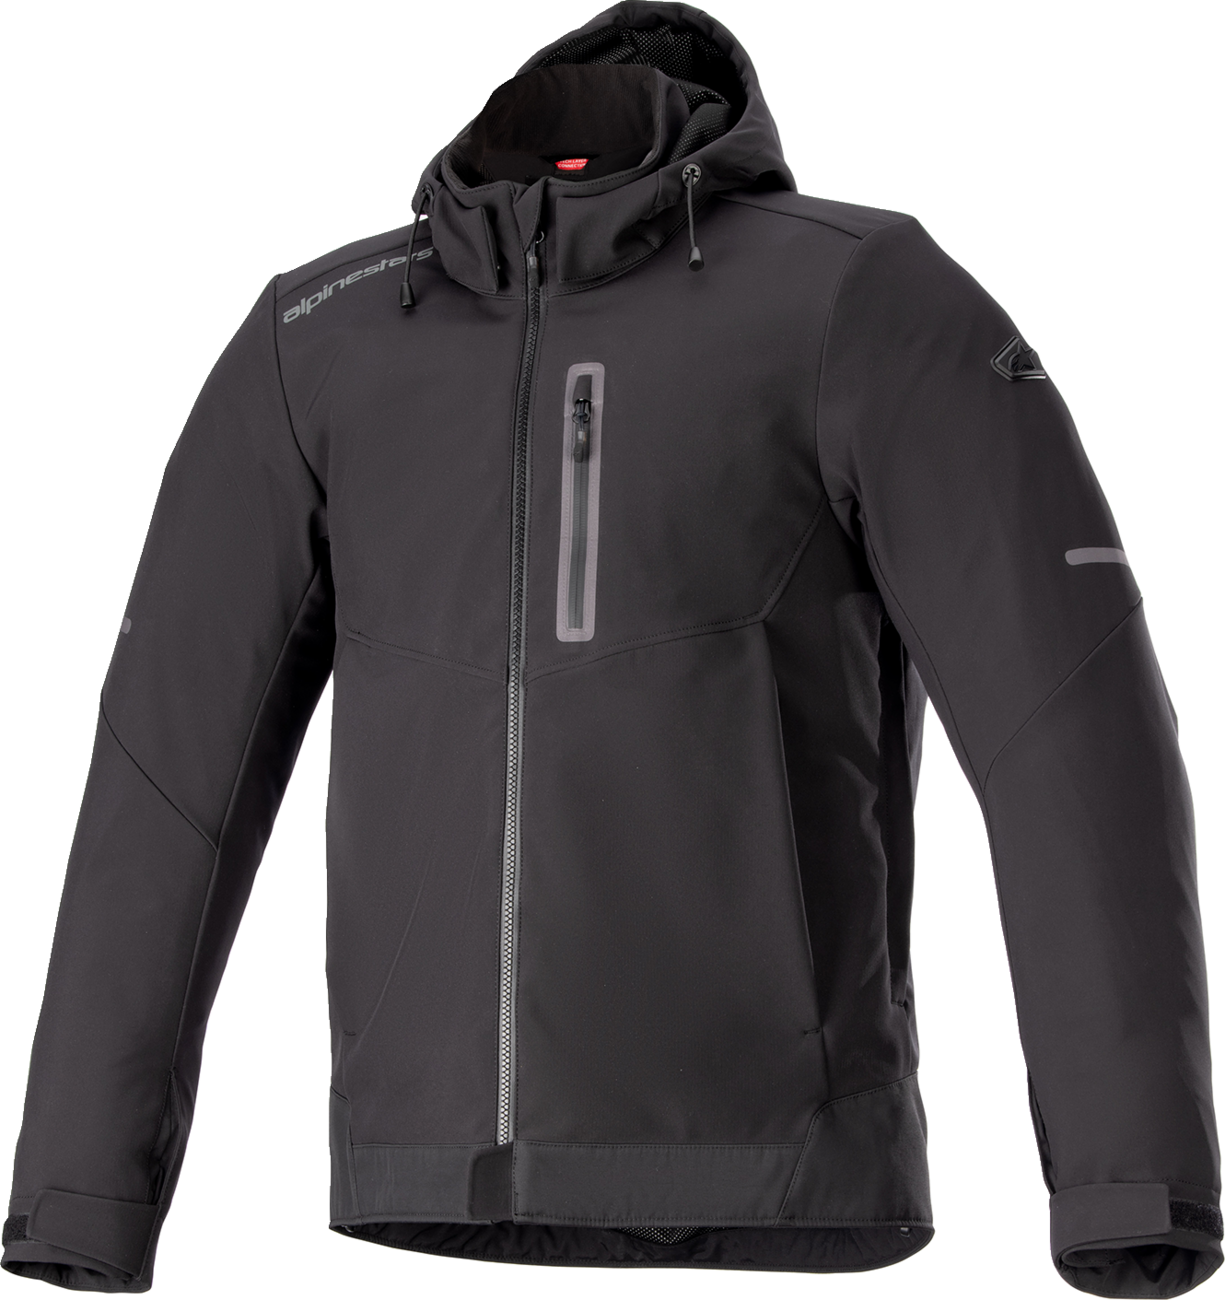 ALPINESTARS Neo Waterproof Jacket - Black - Medium 4208023-1100-M